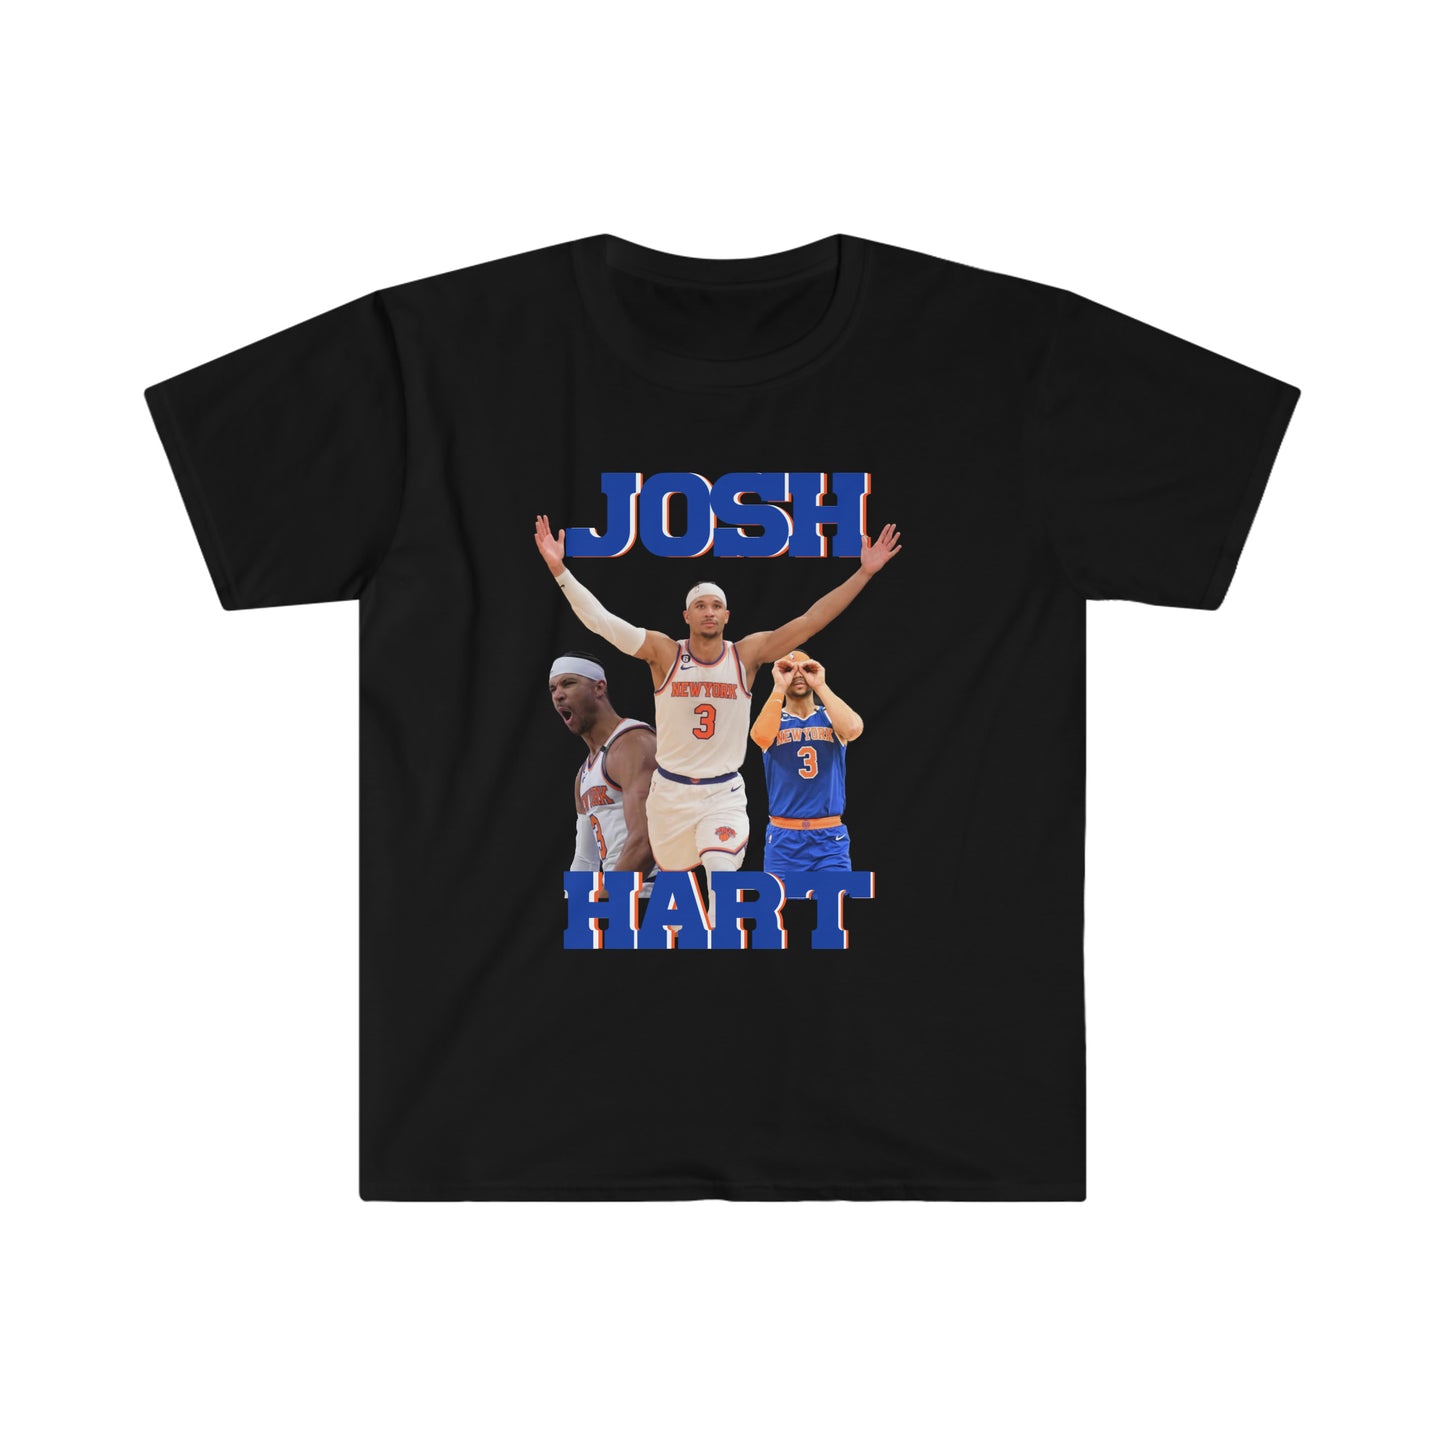 Josh Hart Vintage Shirt